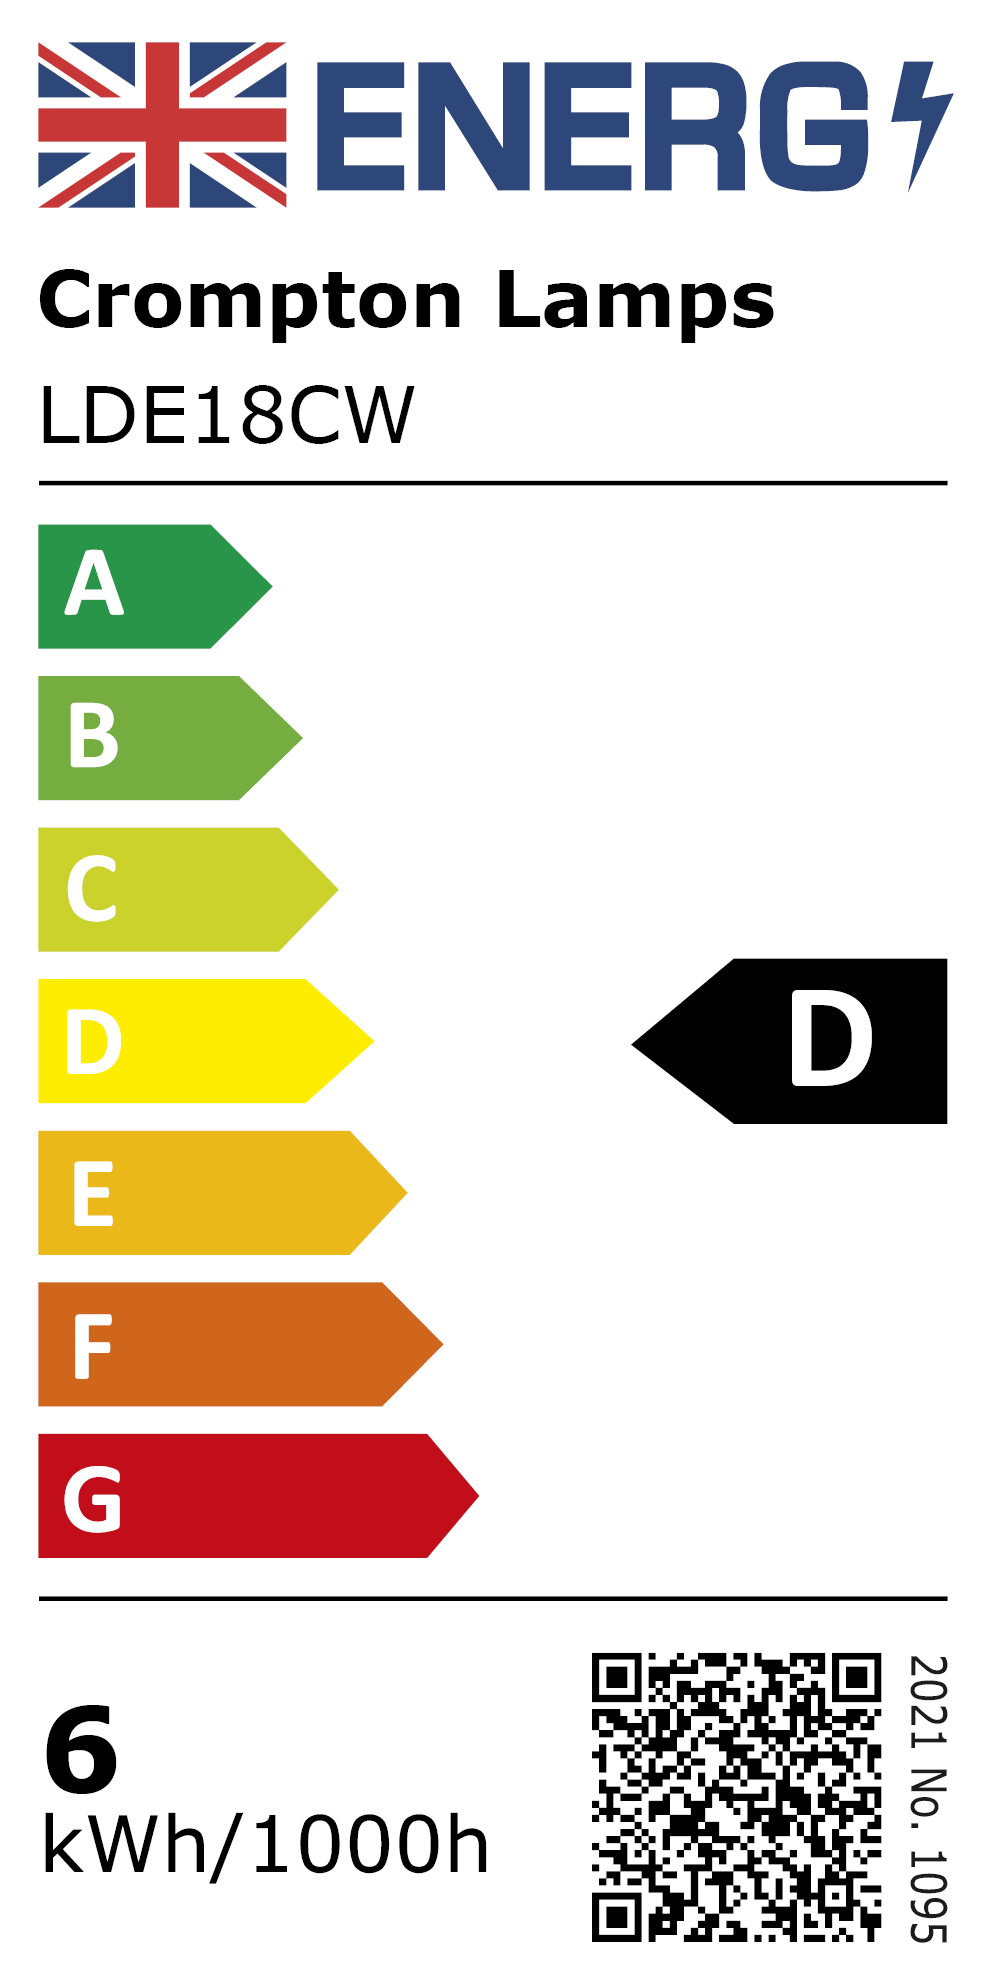 New 2021 Energy Rating Label: MPN LDE18CW